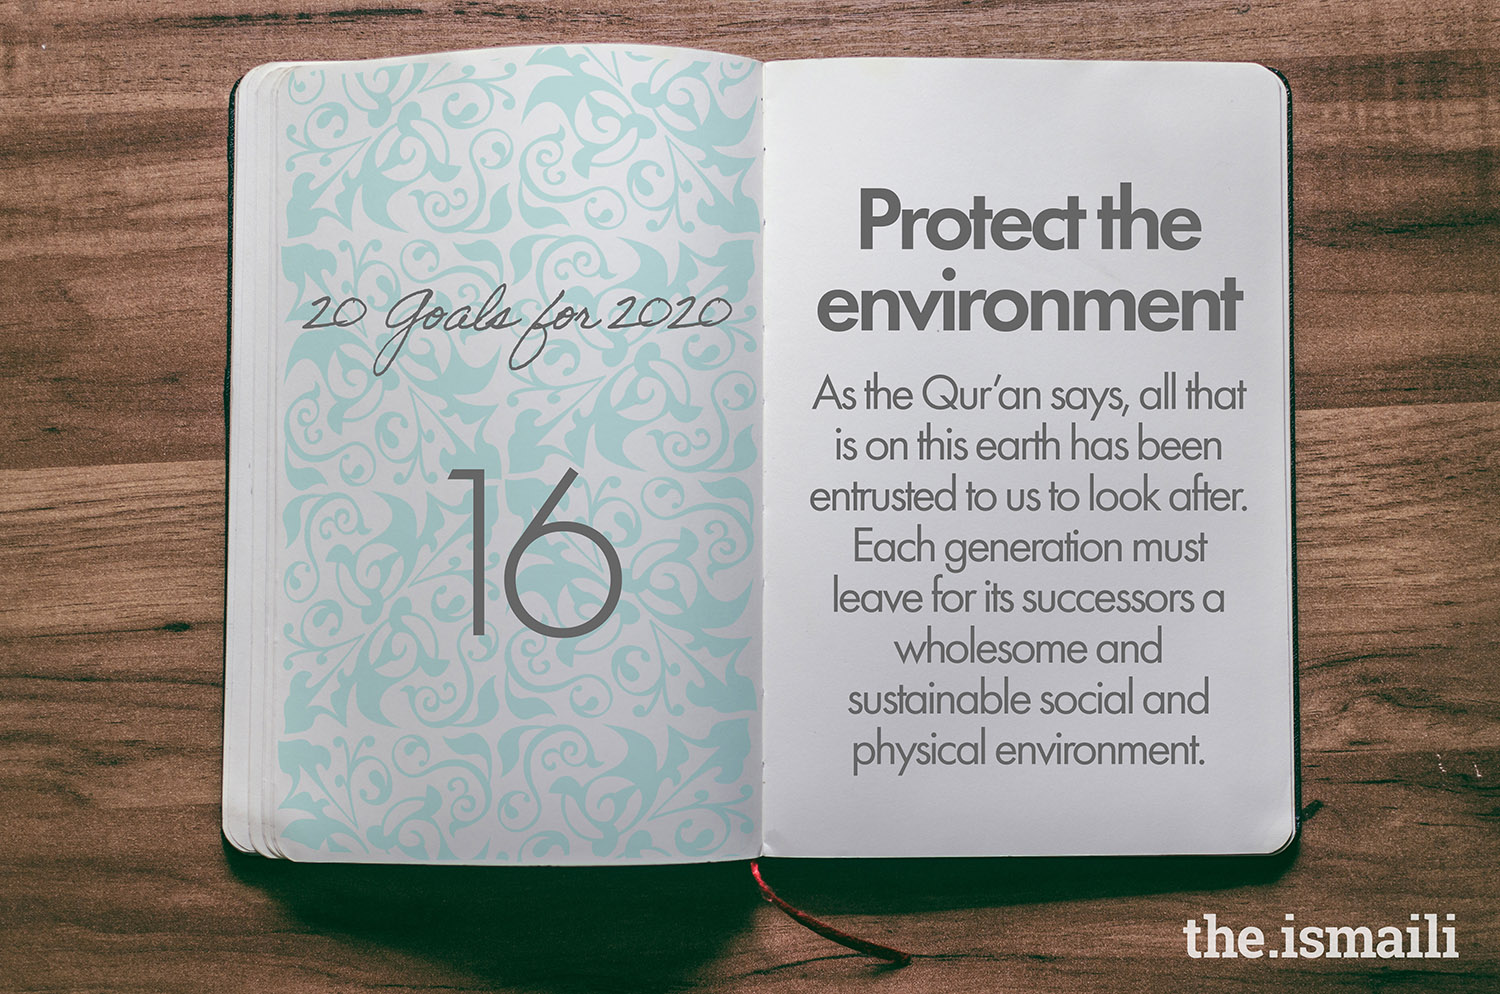 Goal 16: Protect Environment